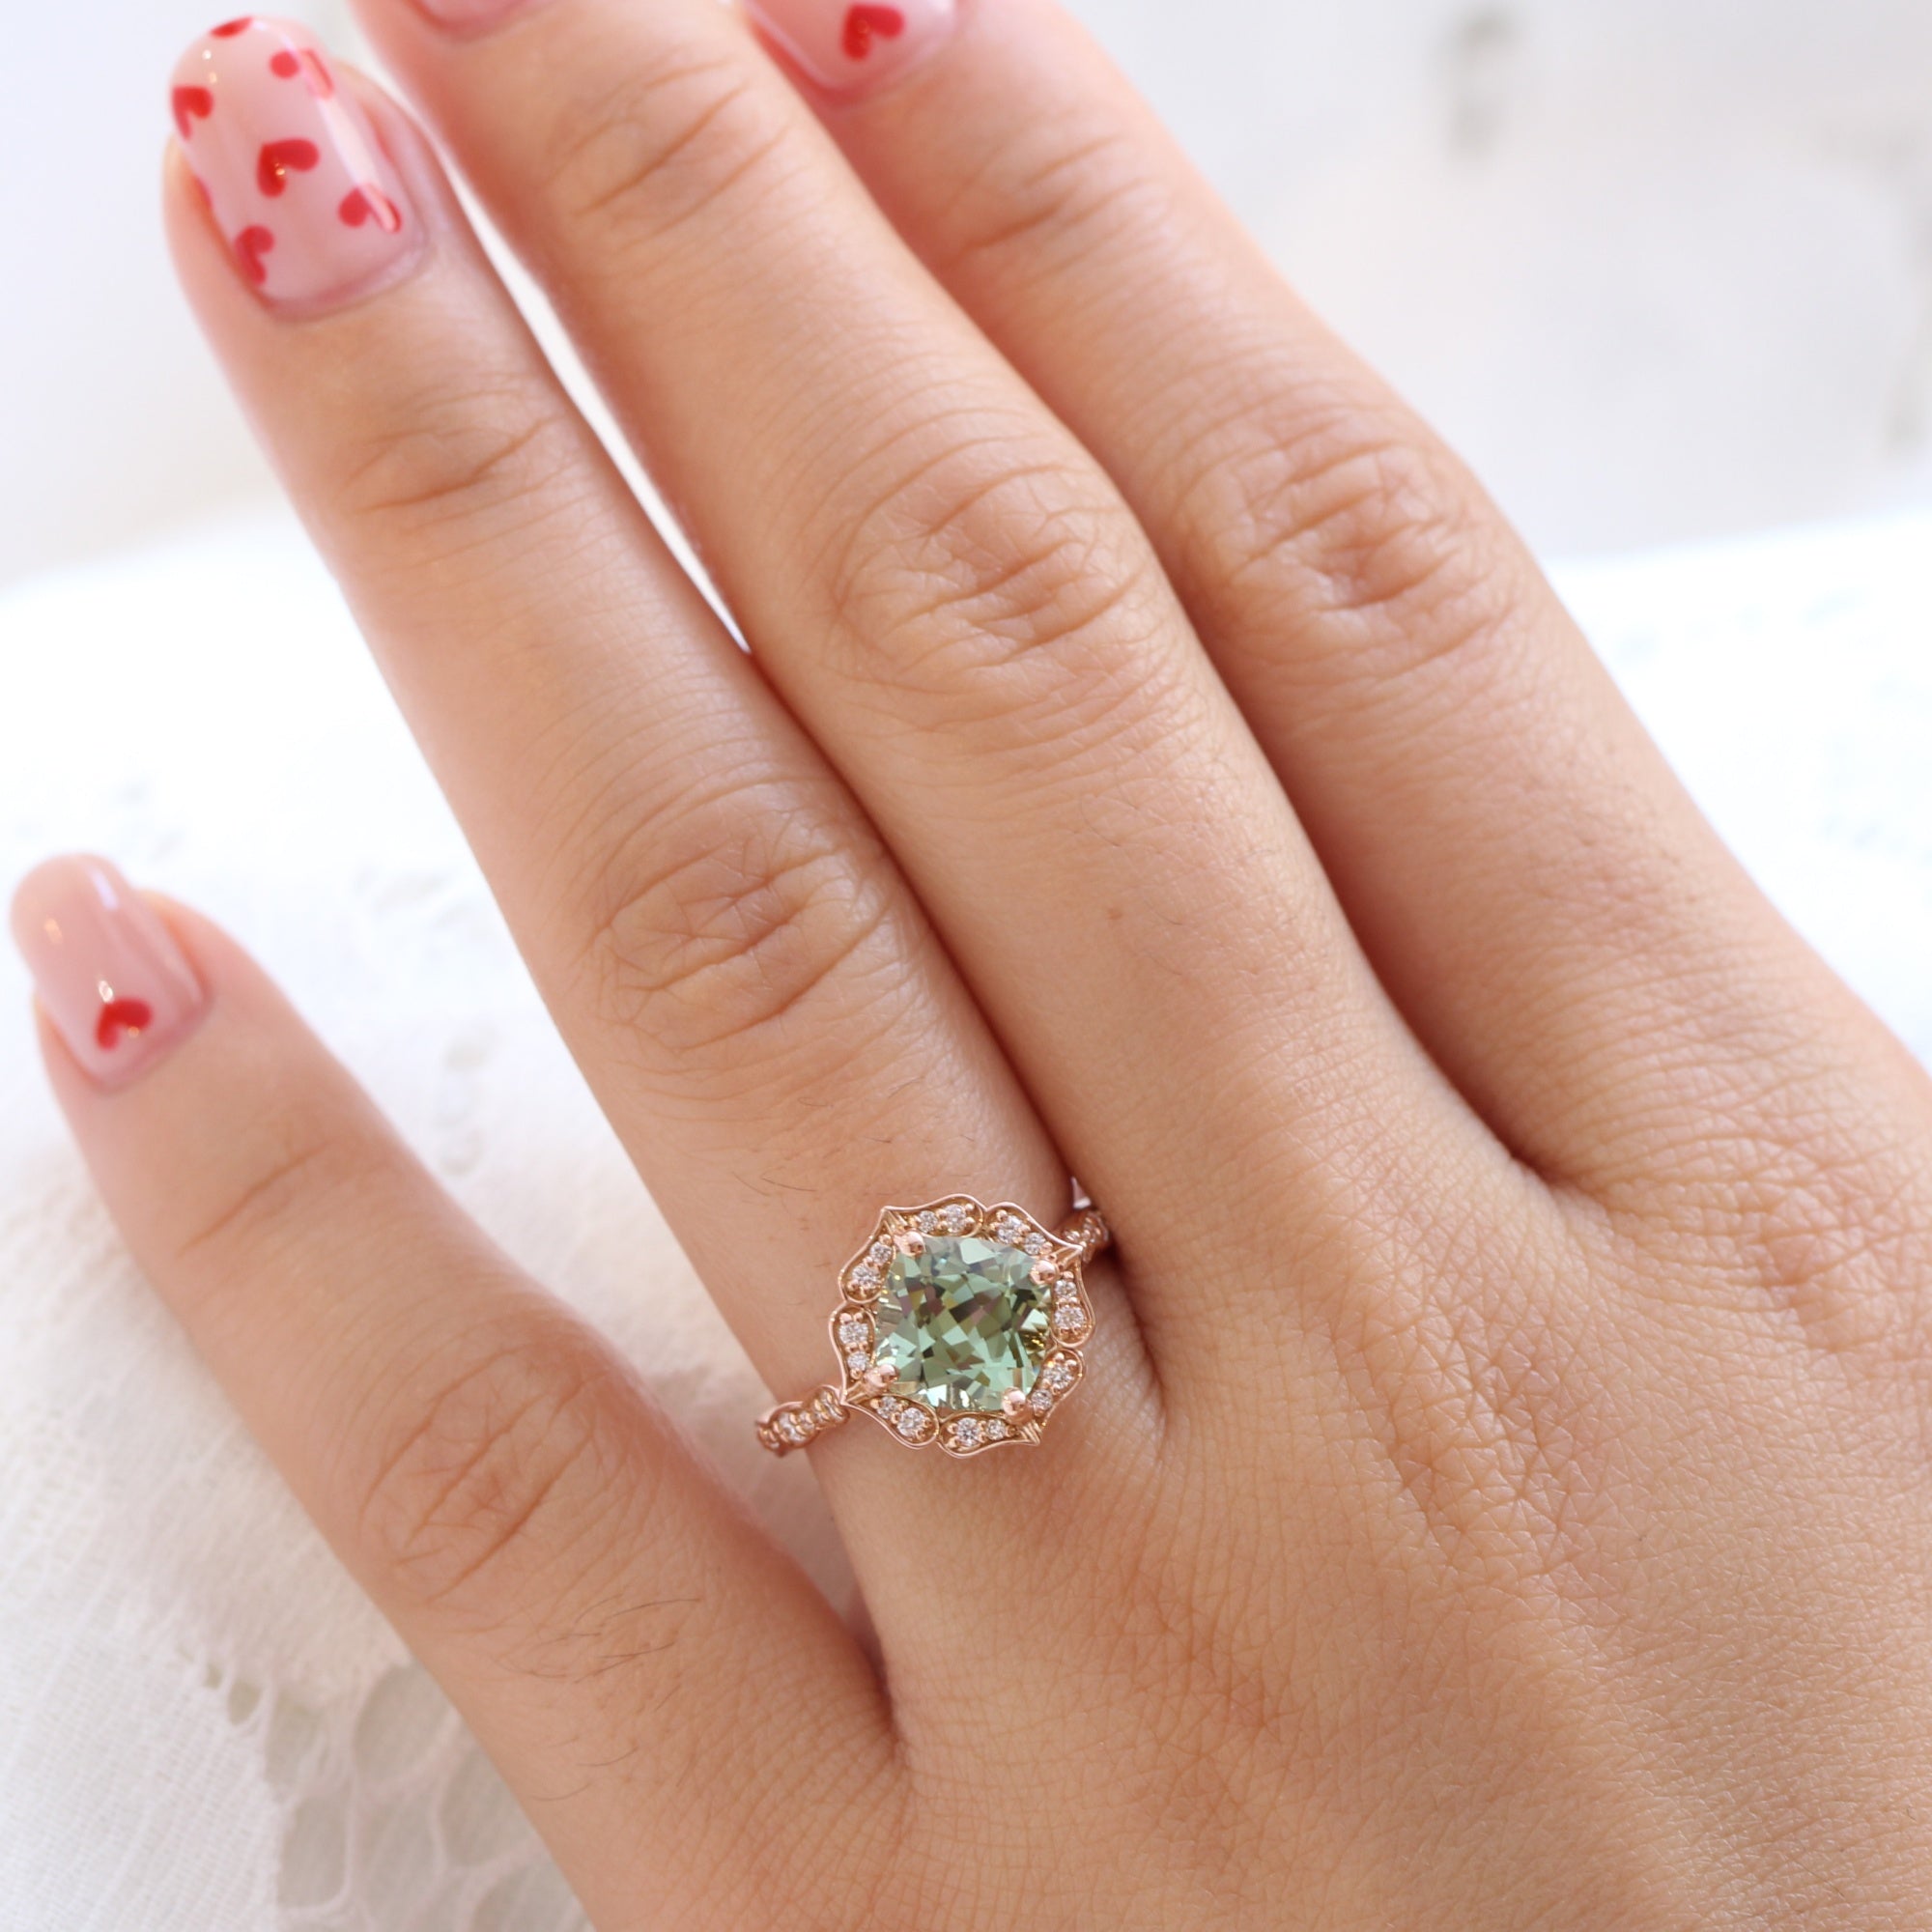 Cushion green sapphire ring rose gold vintage halo diamond ring la more design jewelry